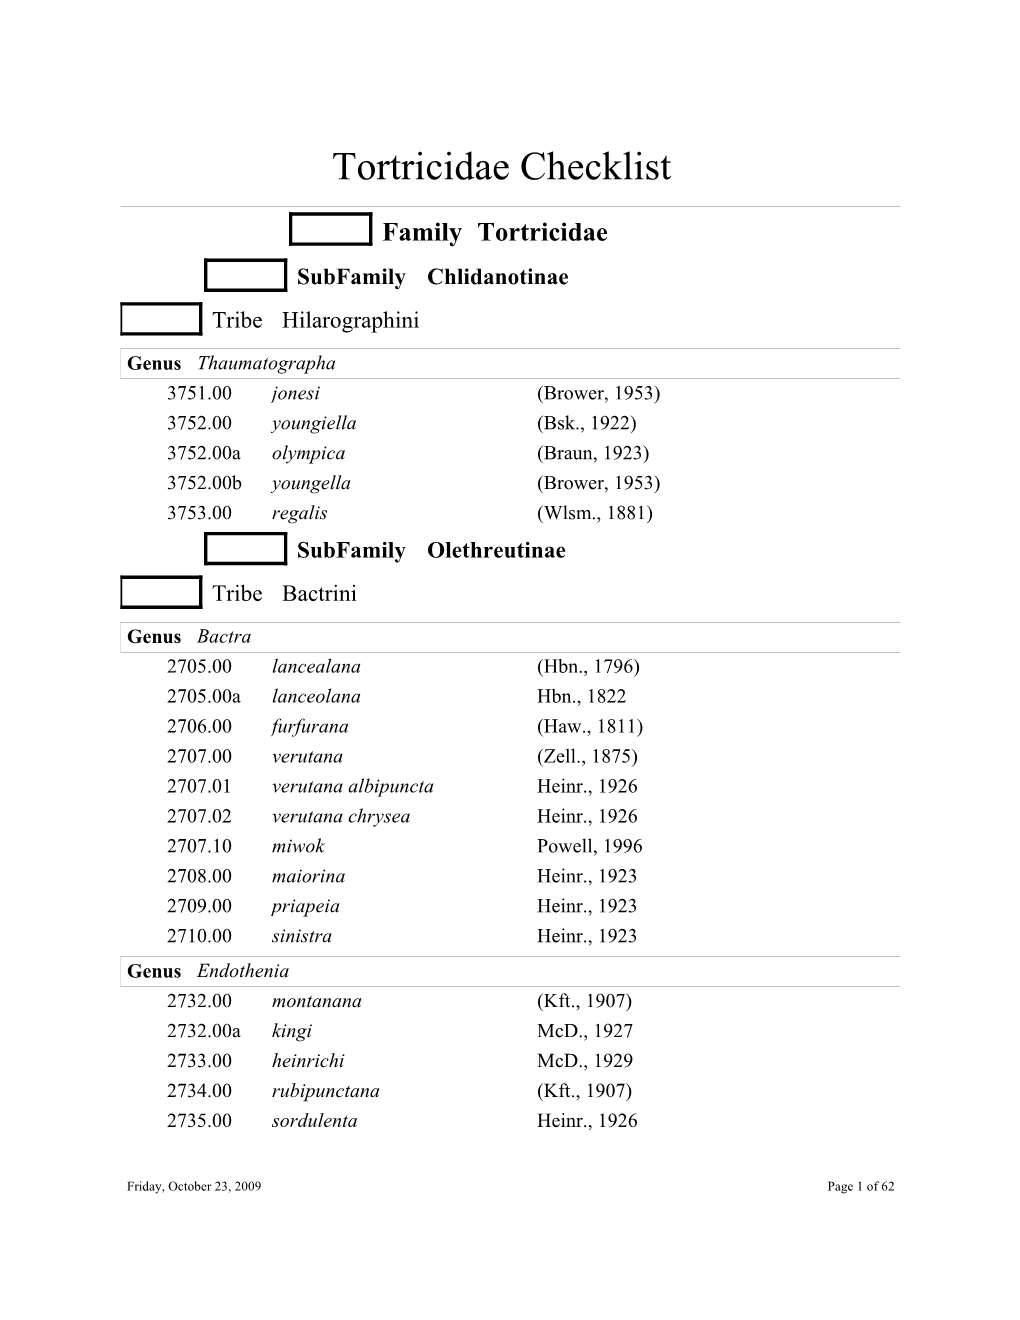 Tortricidae Checklist